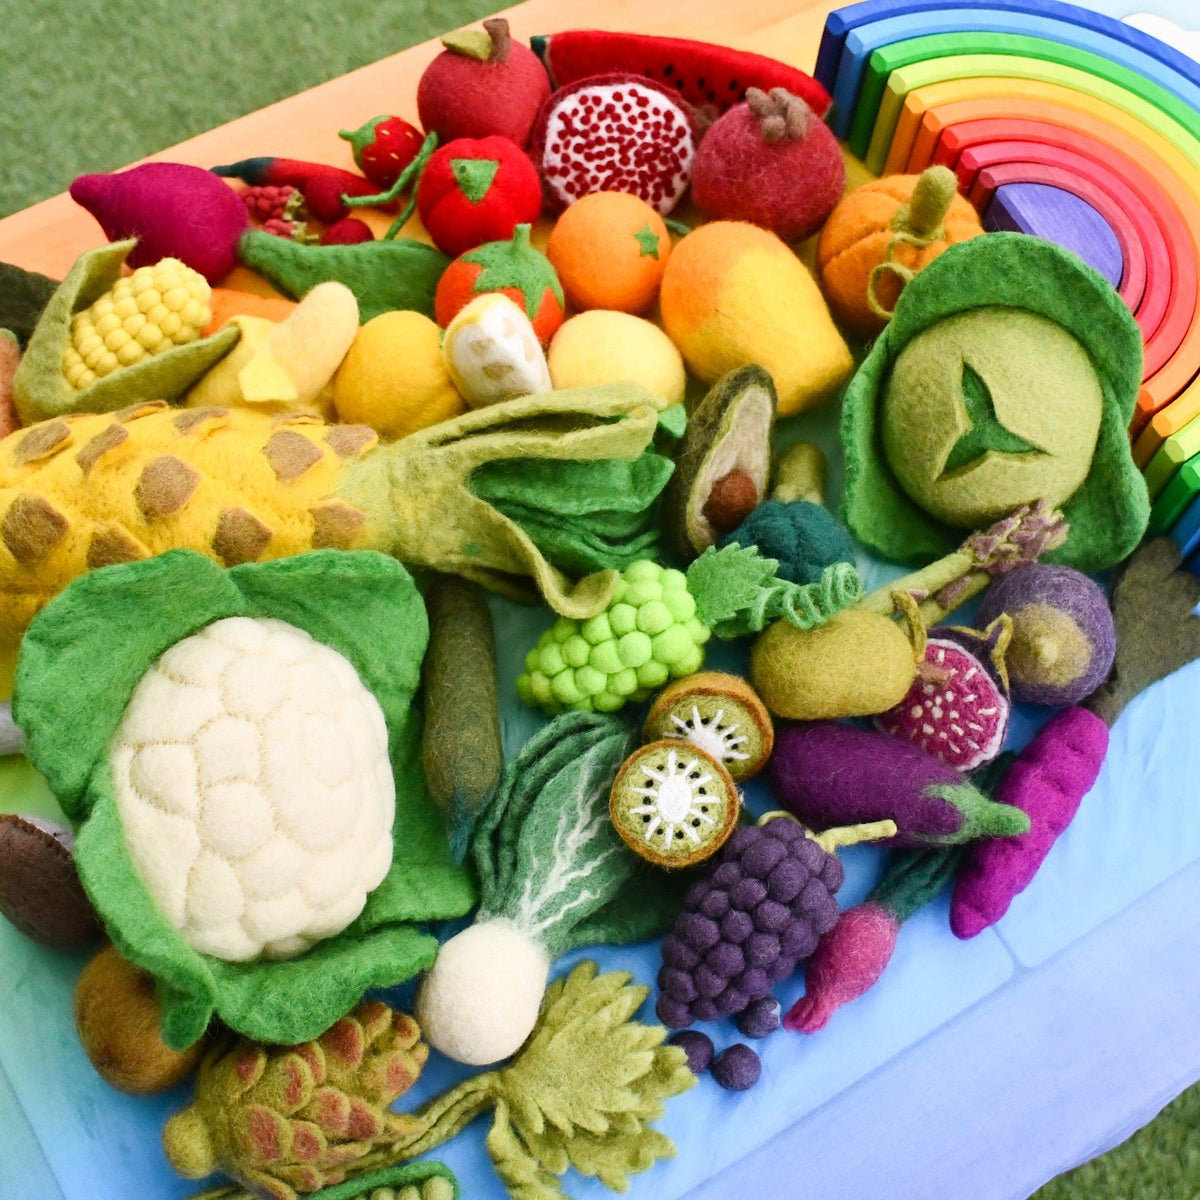 Felt Vegetables and Fruits Set - 15 pieces